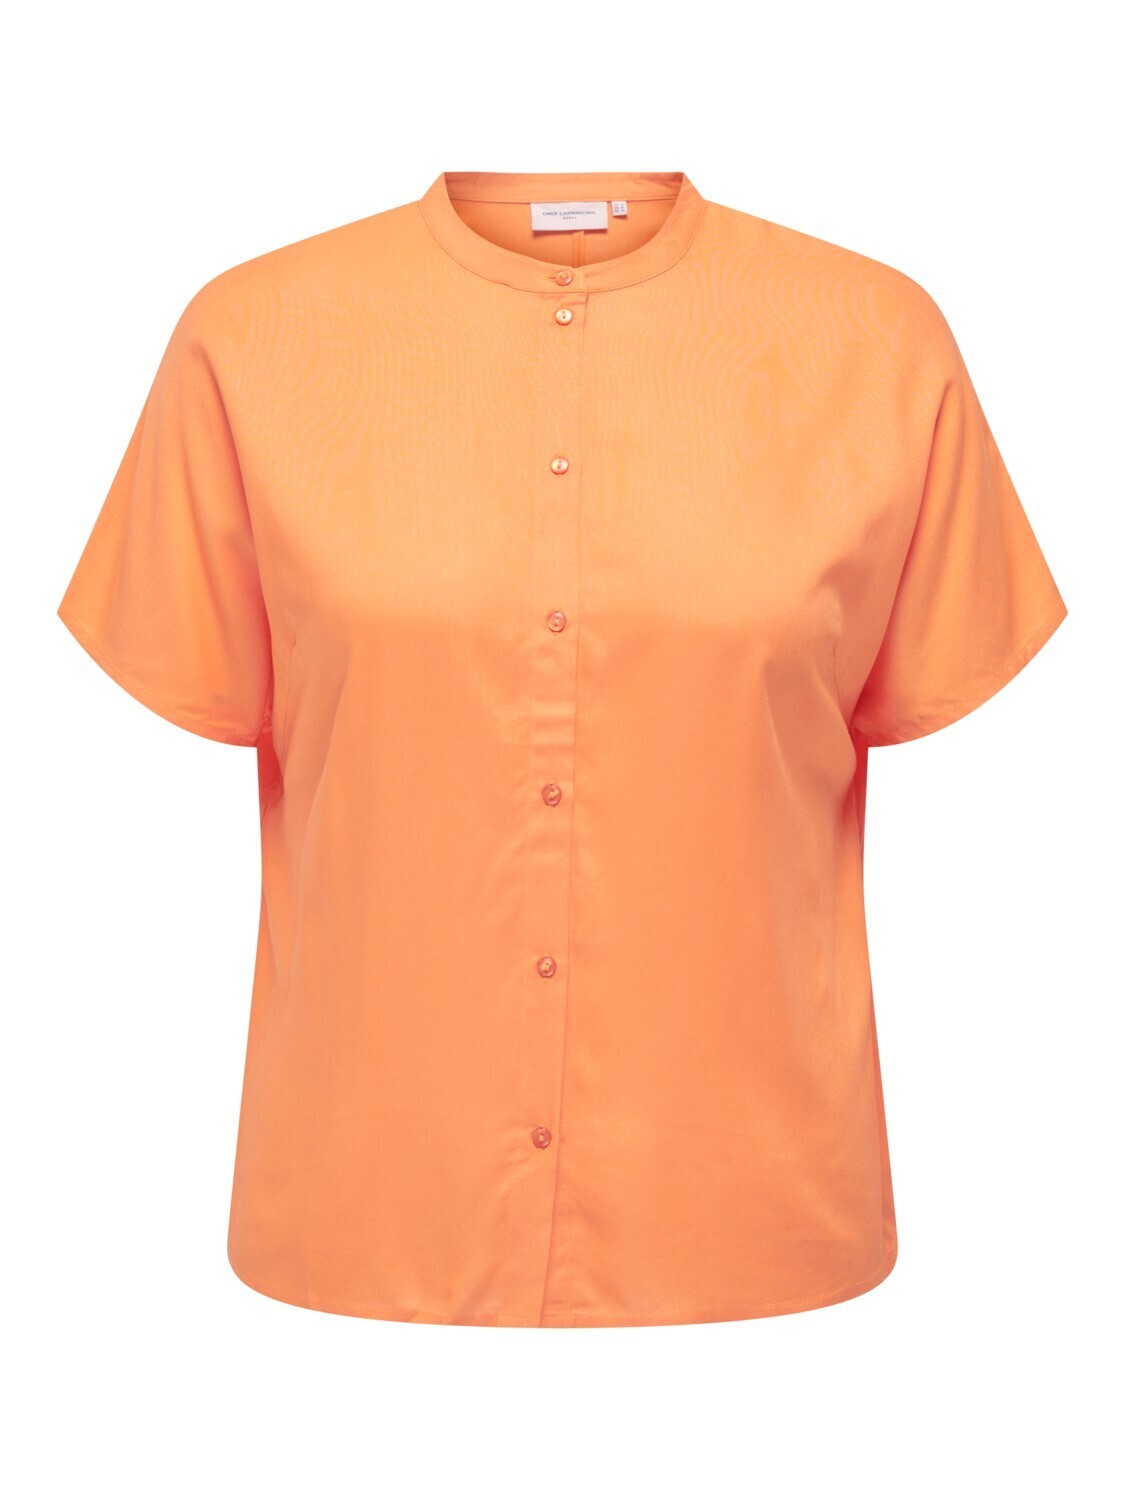 + blouse - DENIZIA - orange peel